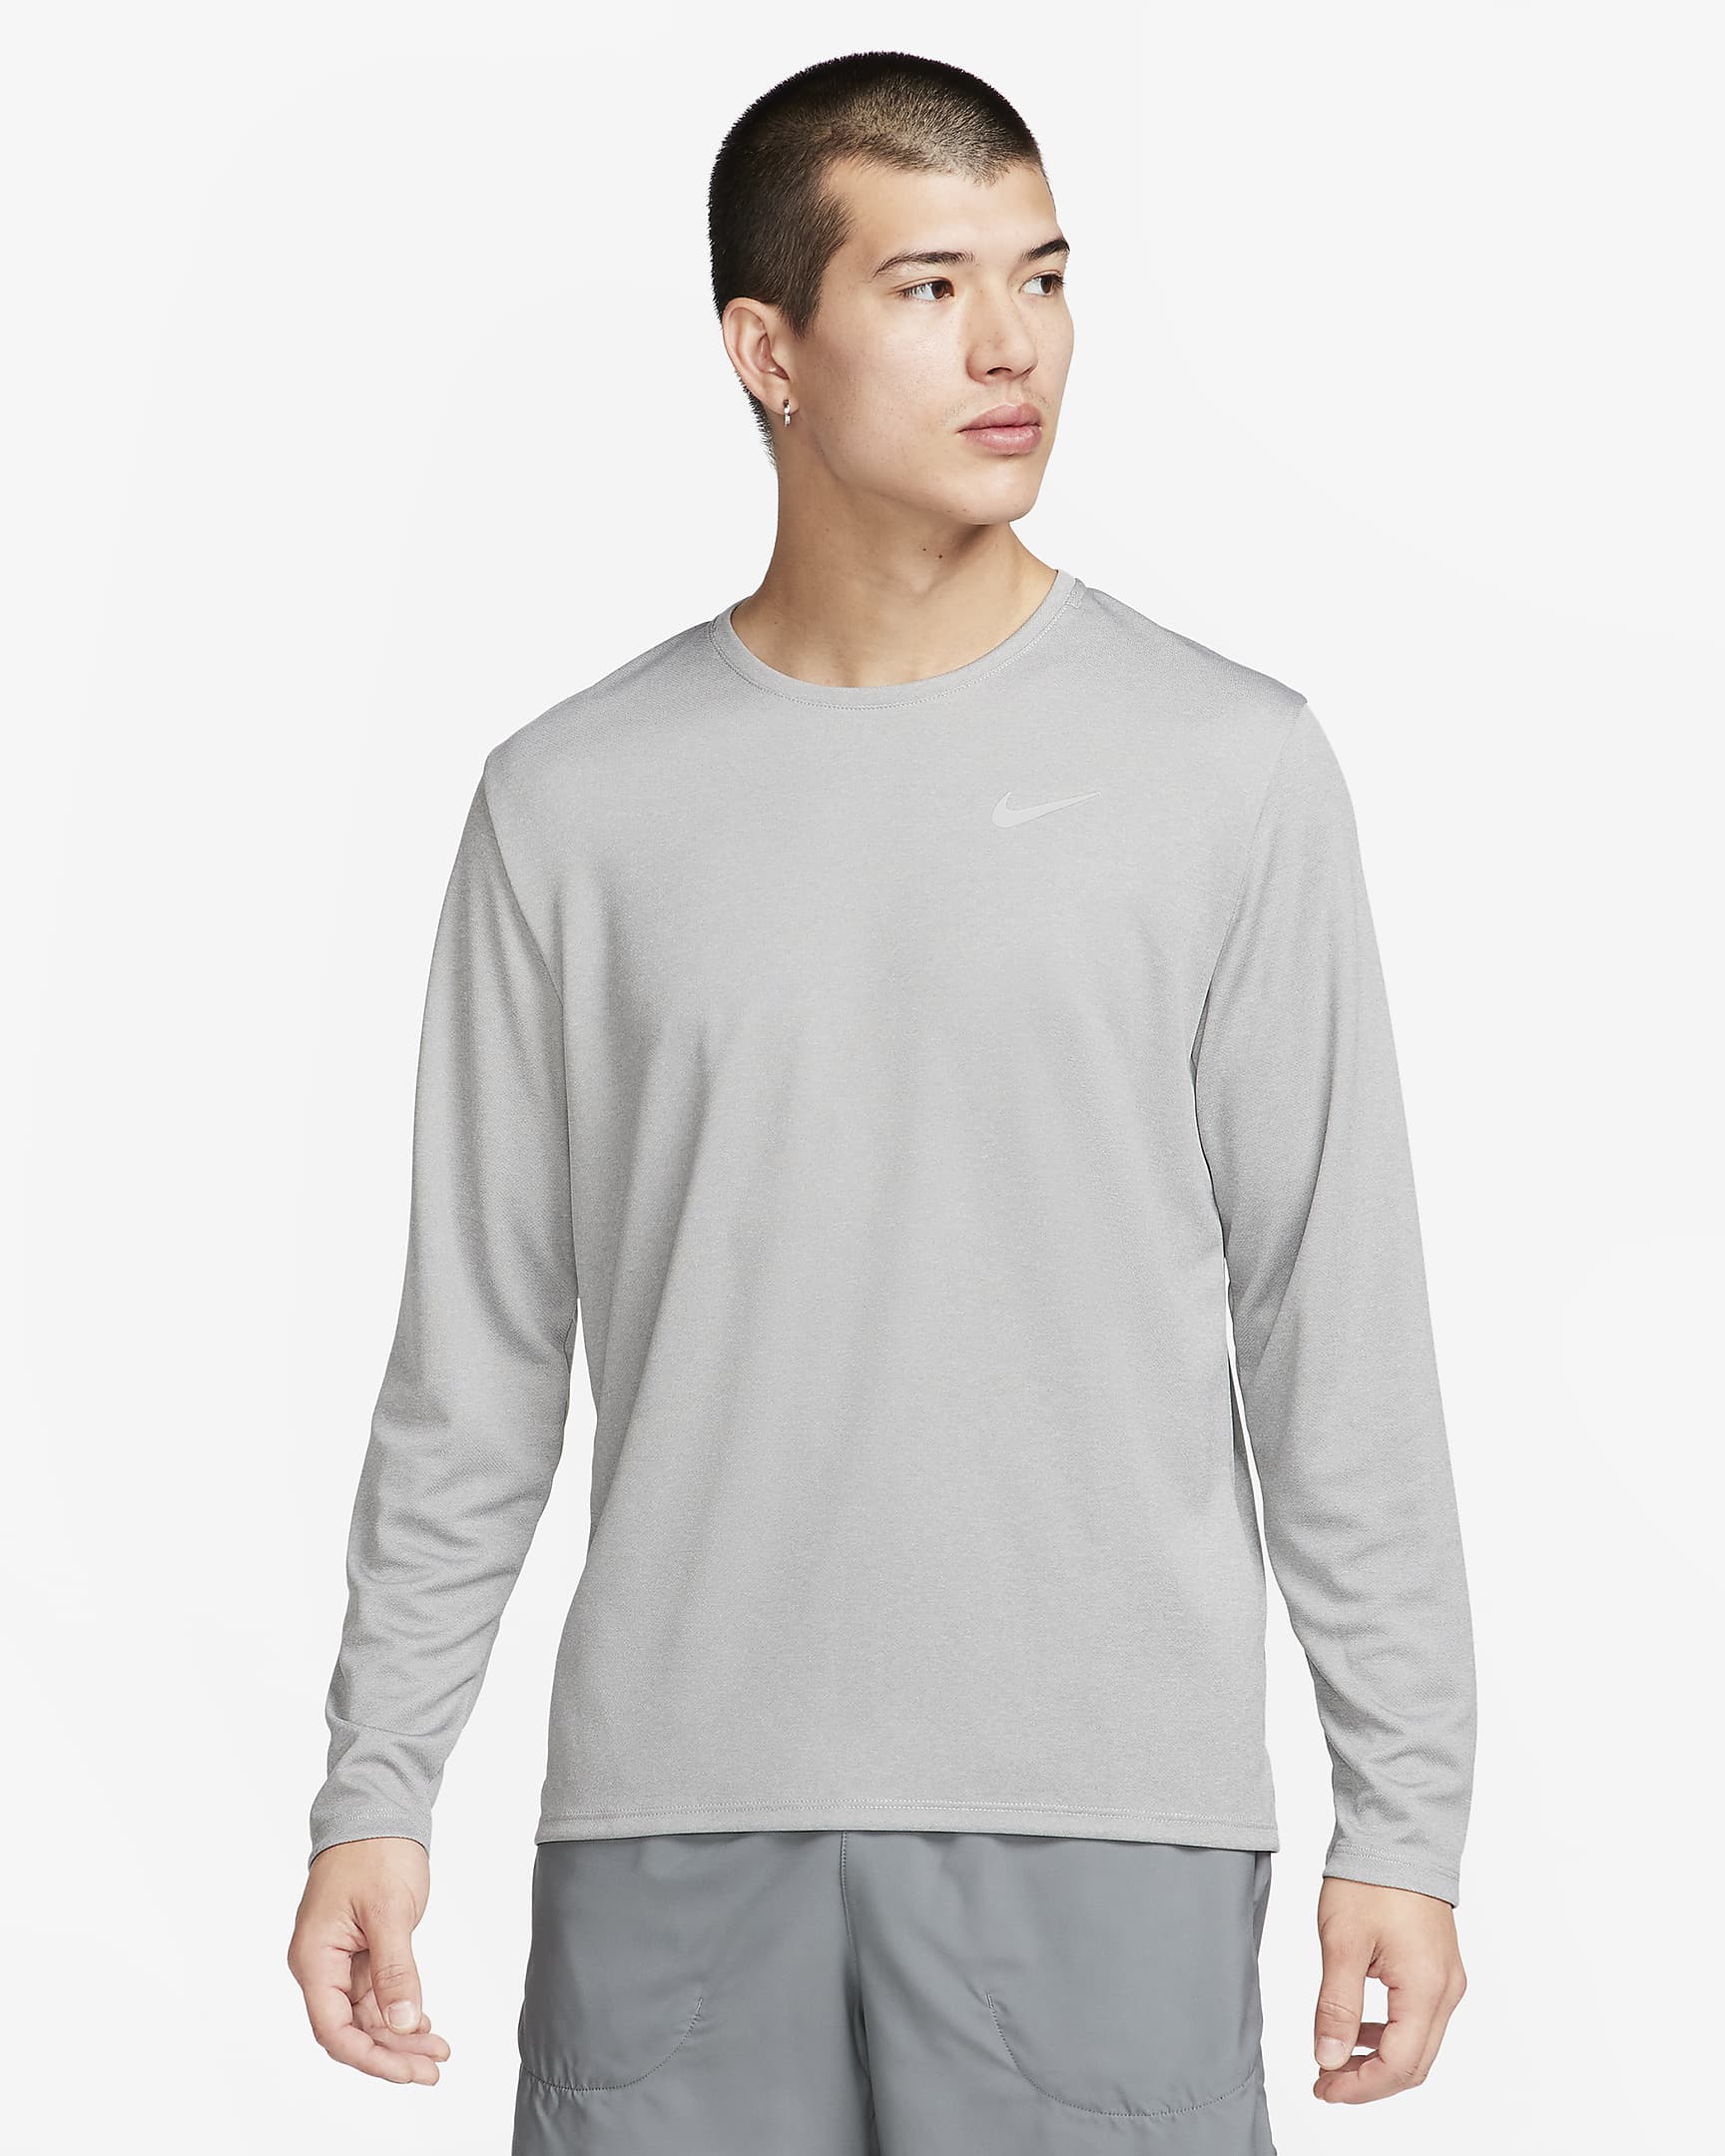 Nike Miler Men's Dri-FIT UV Long-Sleeve Running Top. Nike SG